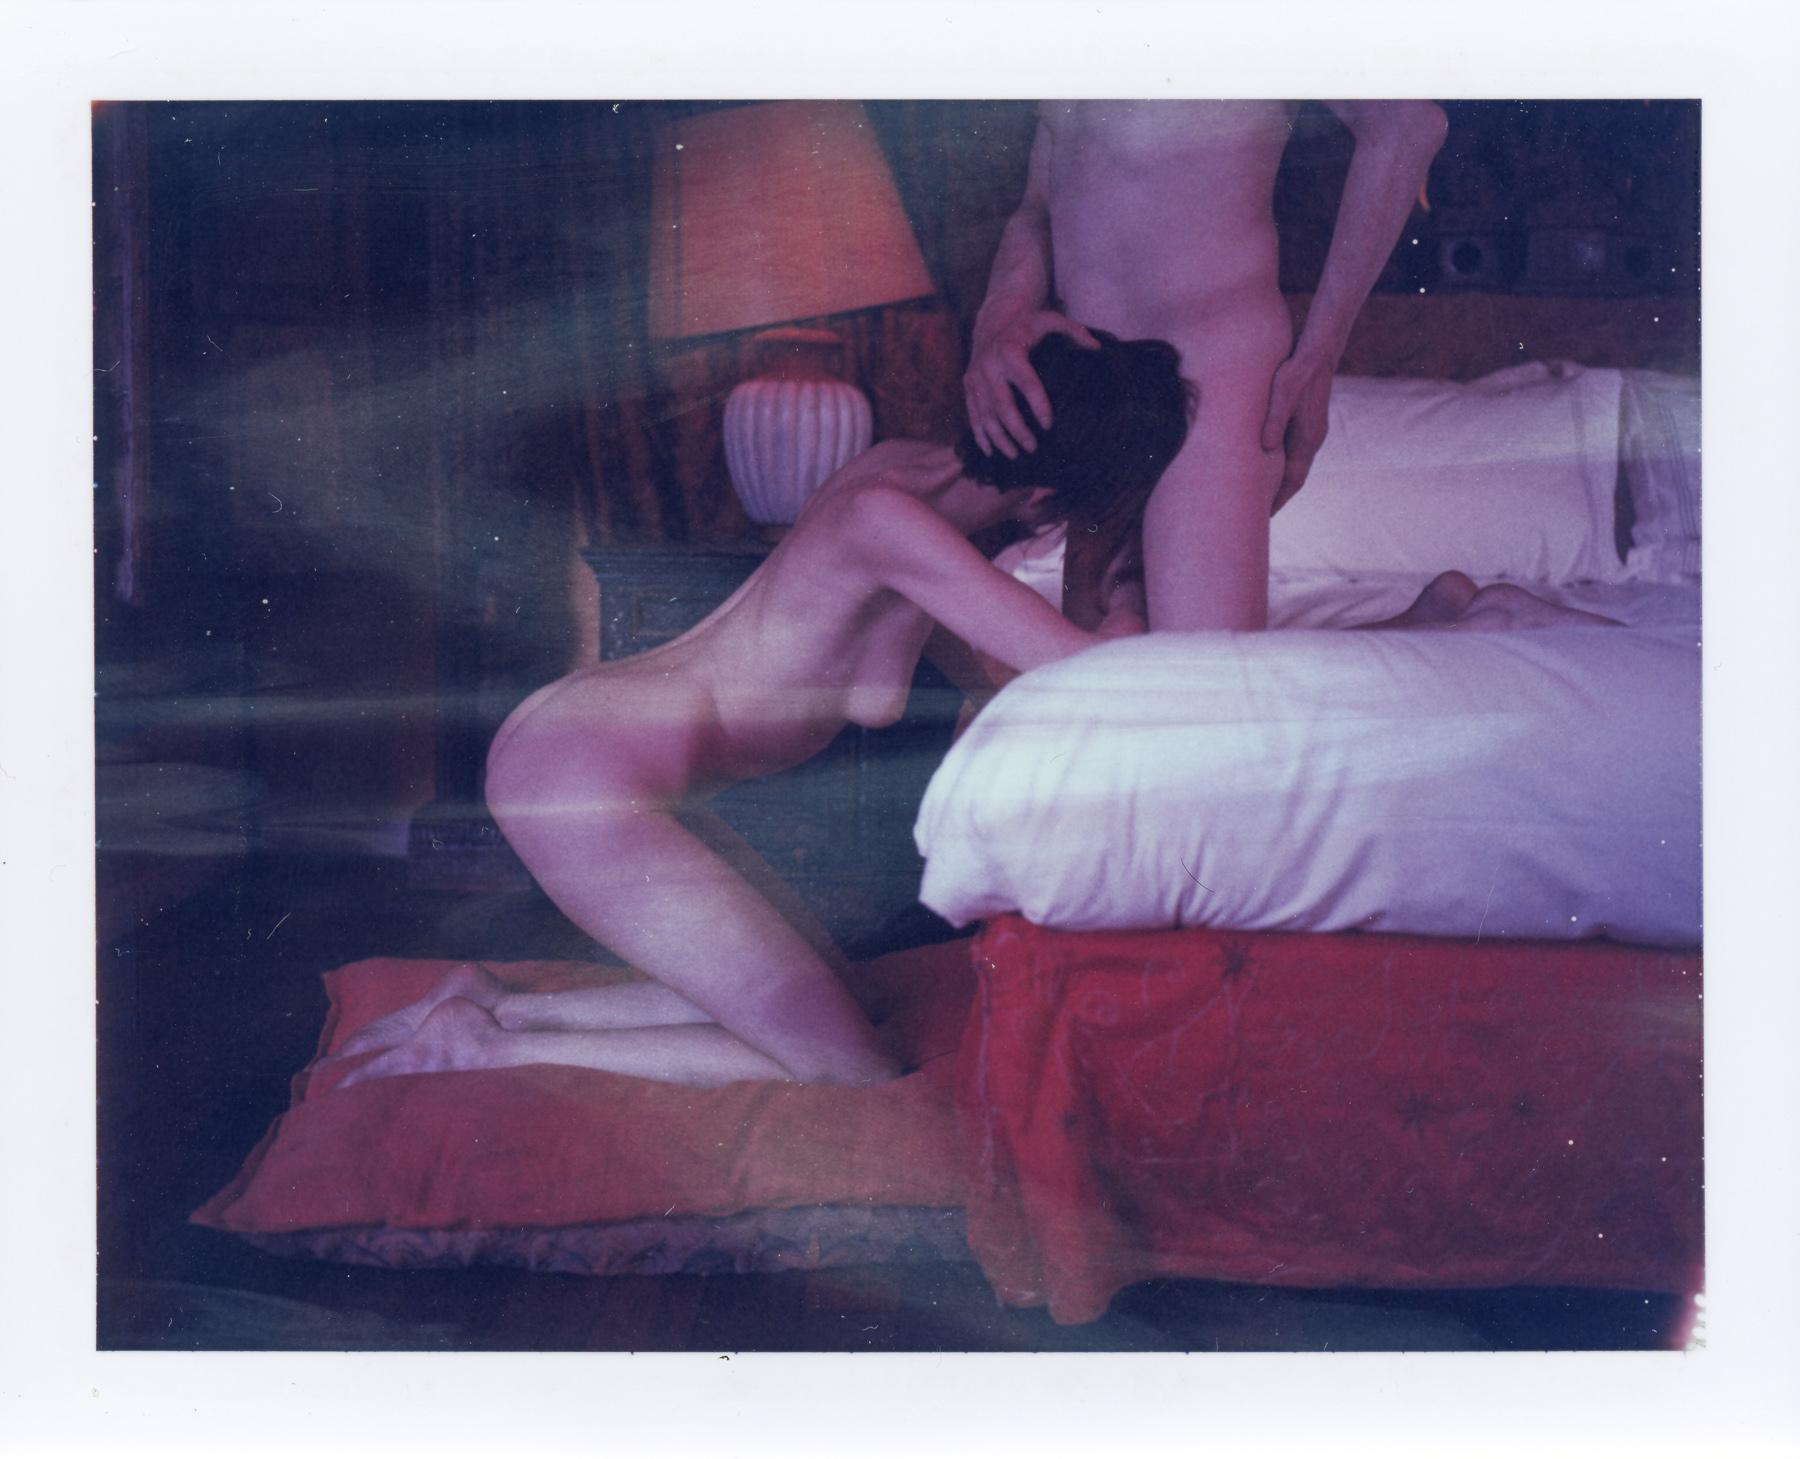 Kirsten Thys van den Audenaerde Color Photograph - The receiving End - 21st Century, Polaroid, Nude Photography